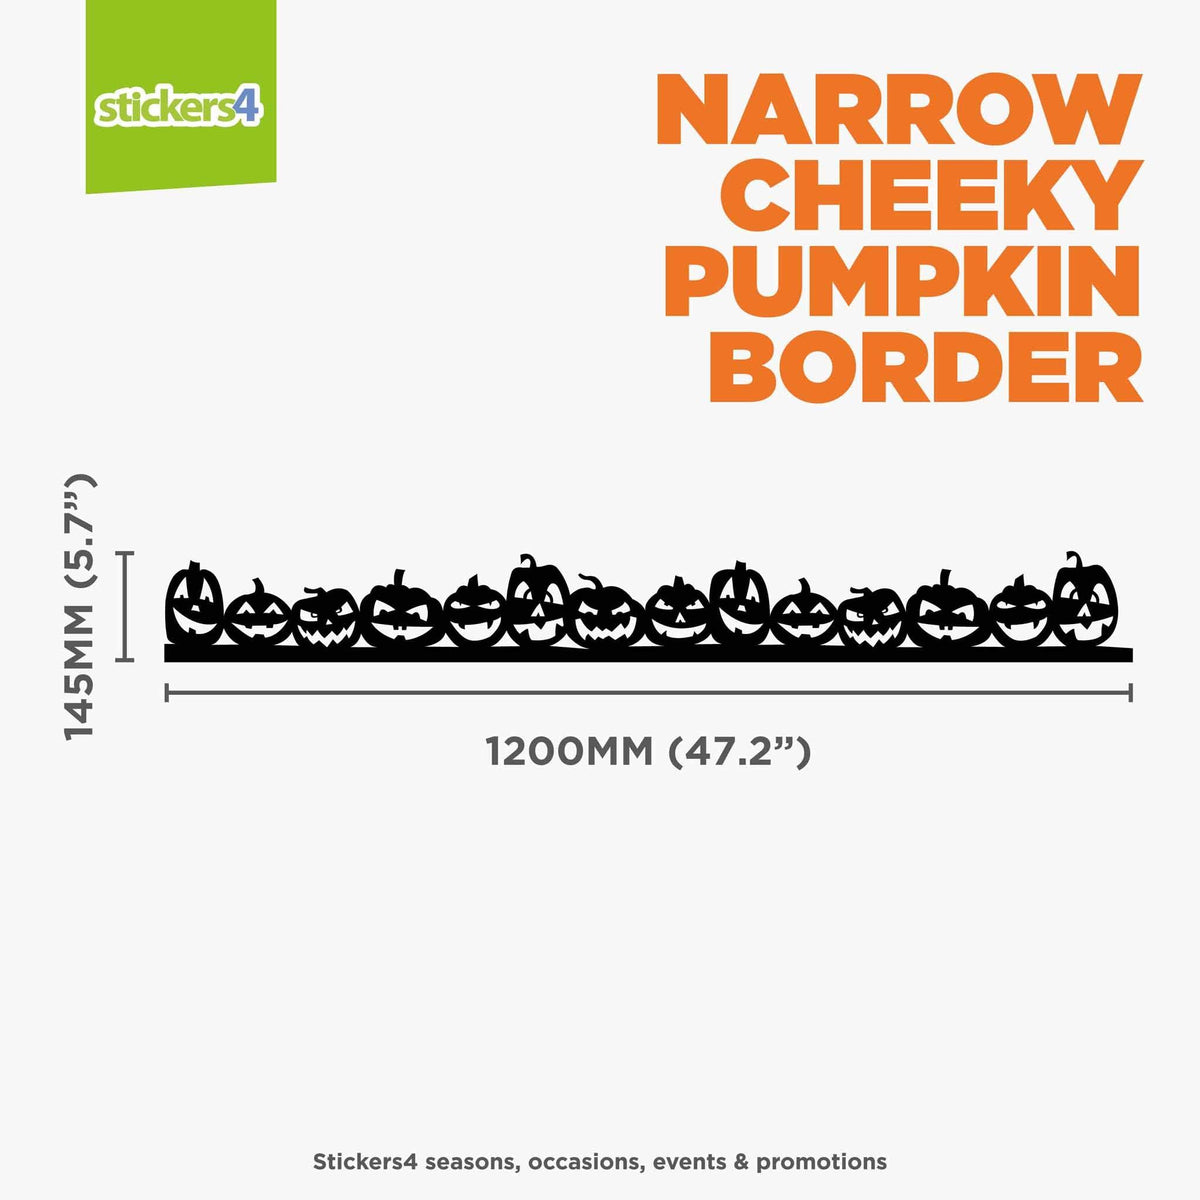 Narrow Cheeky Pumpkin Border Window Cling Sticker (White or Black) Halloween Display